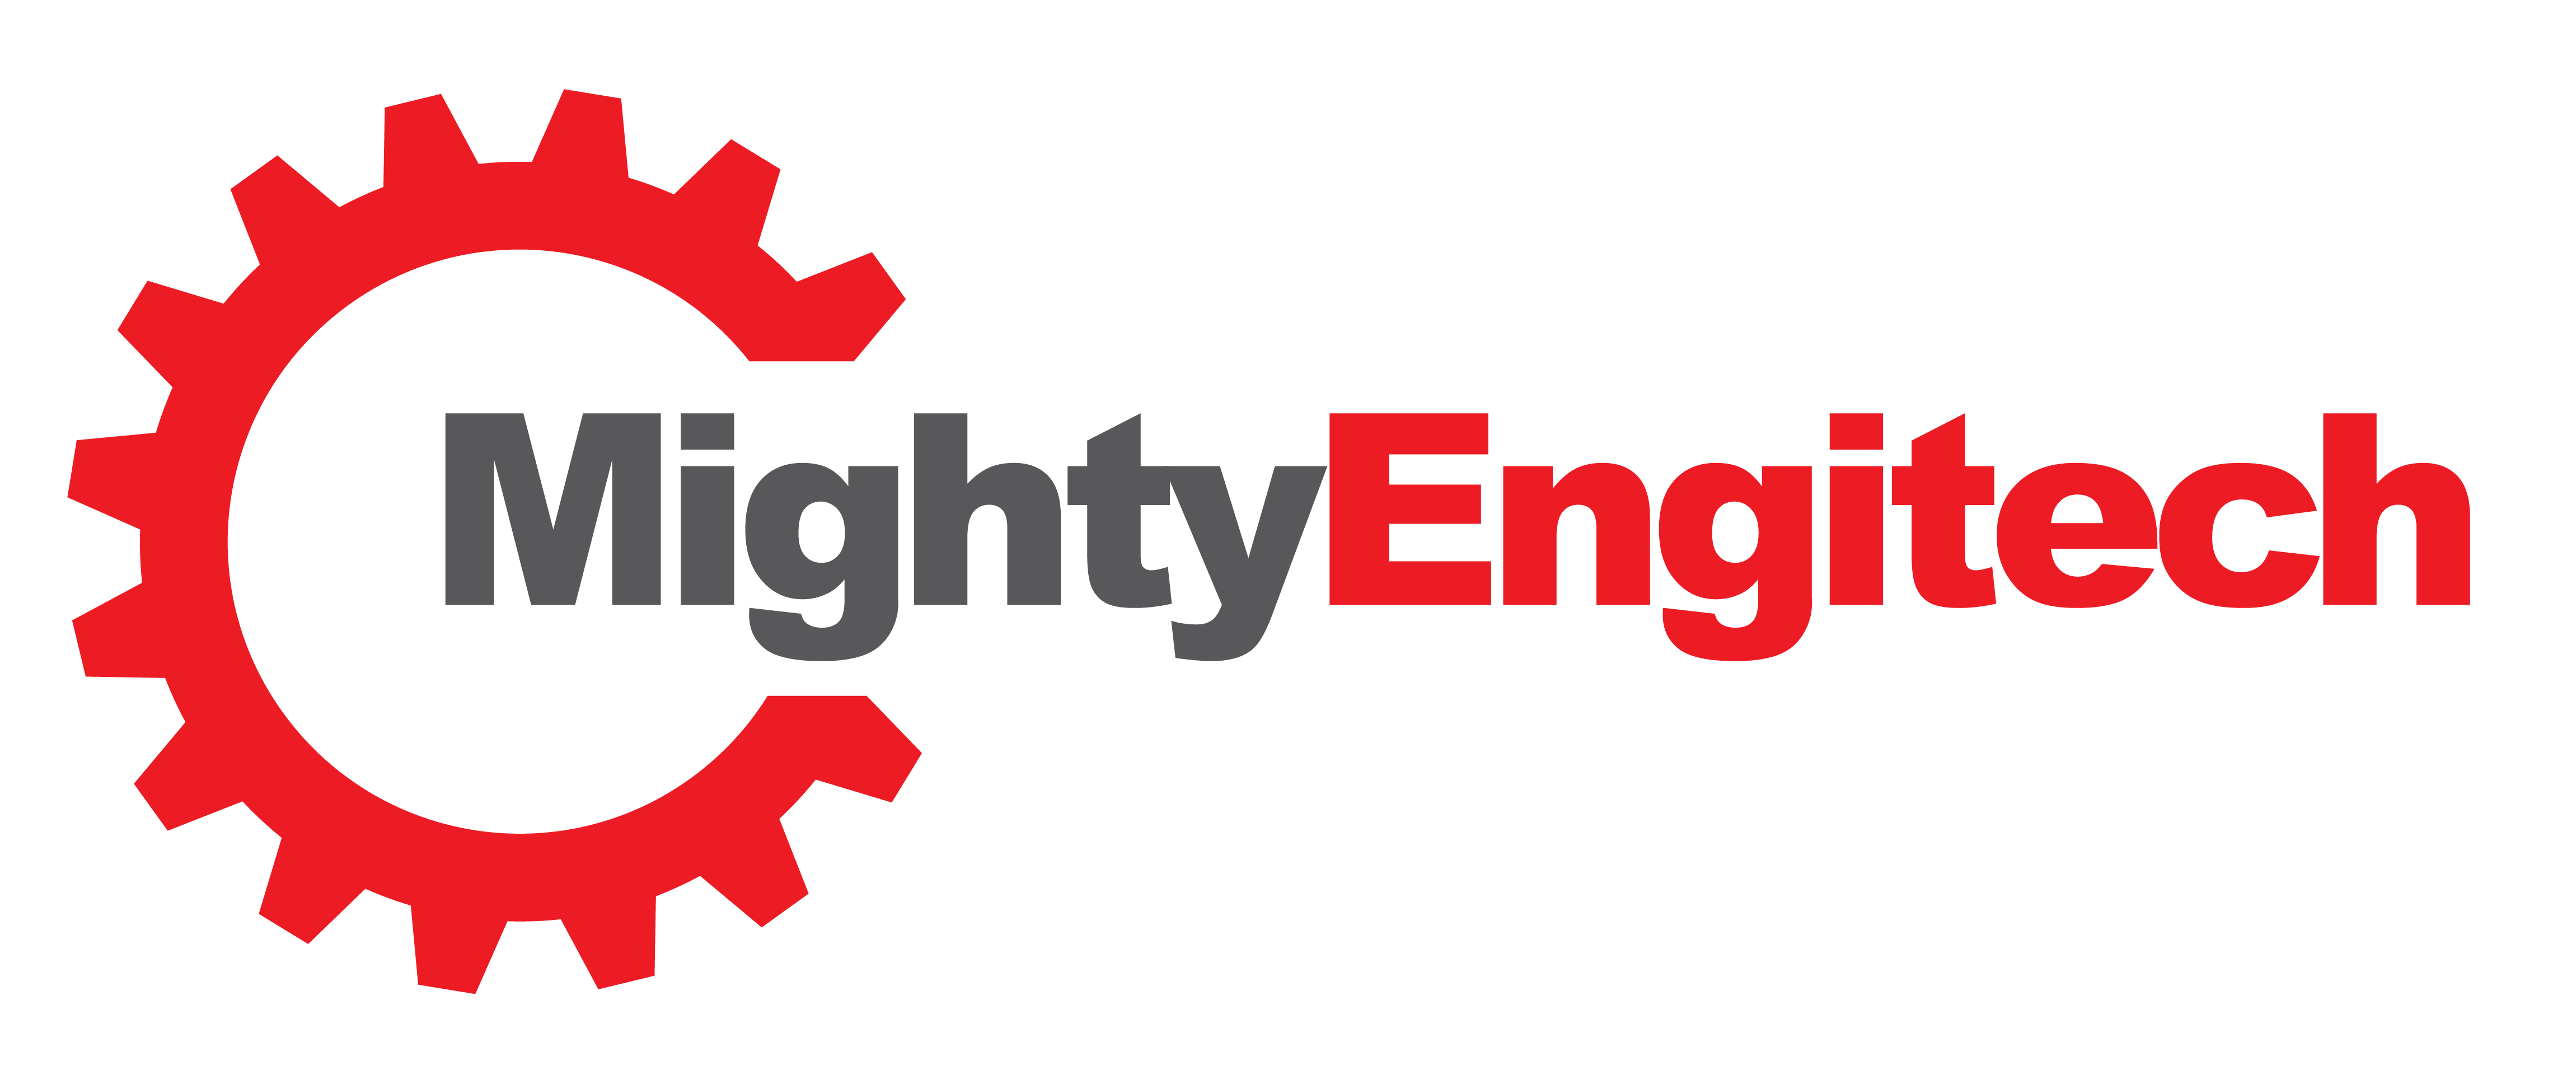 Mighty Engitech